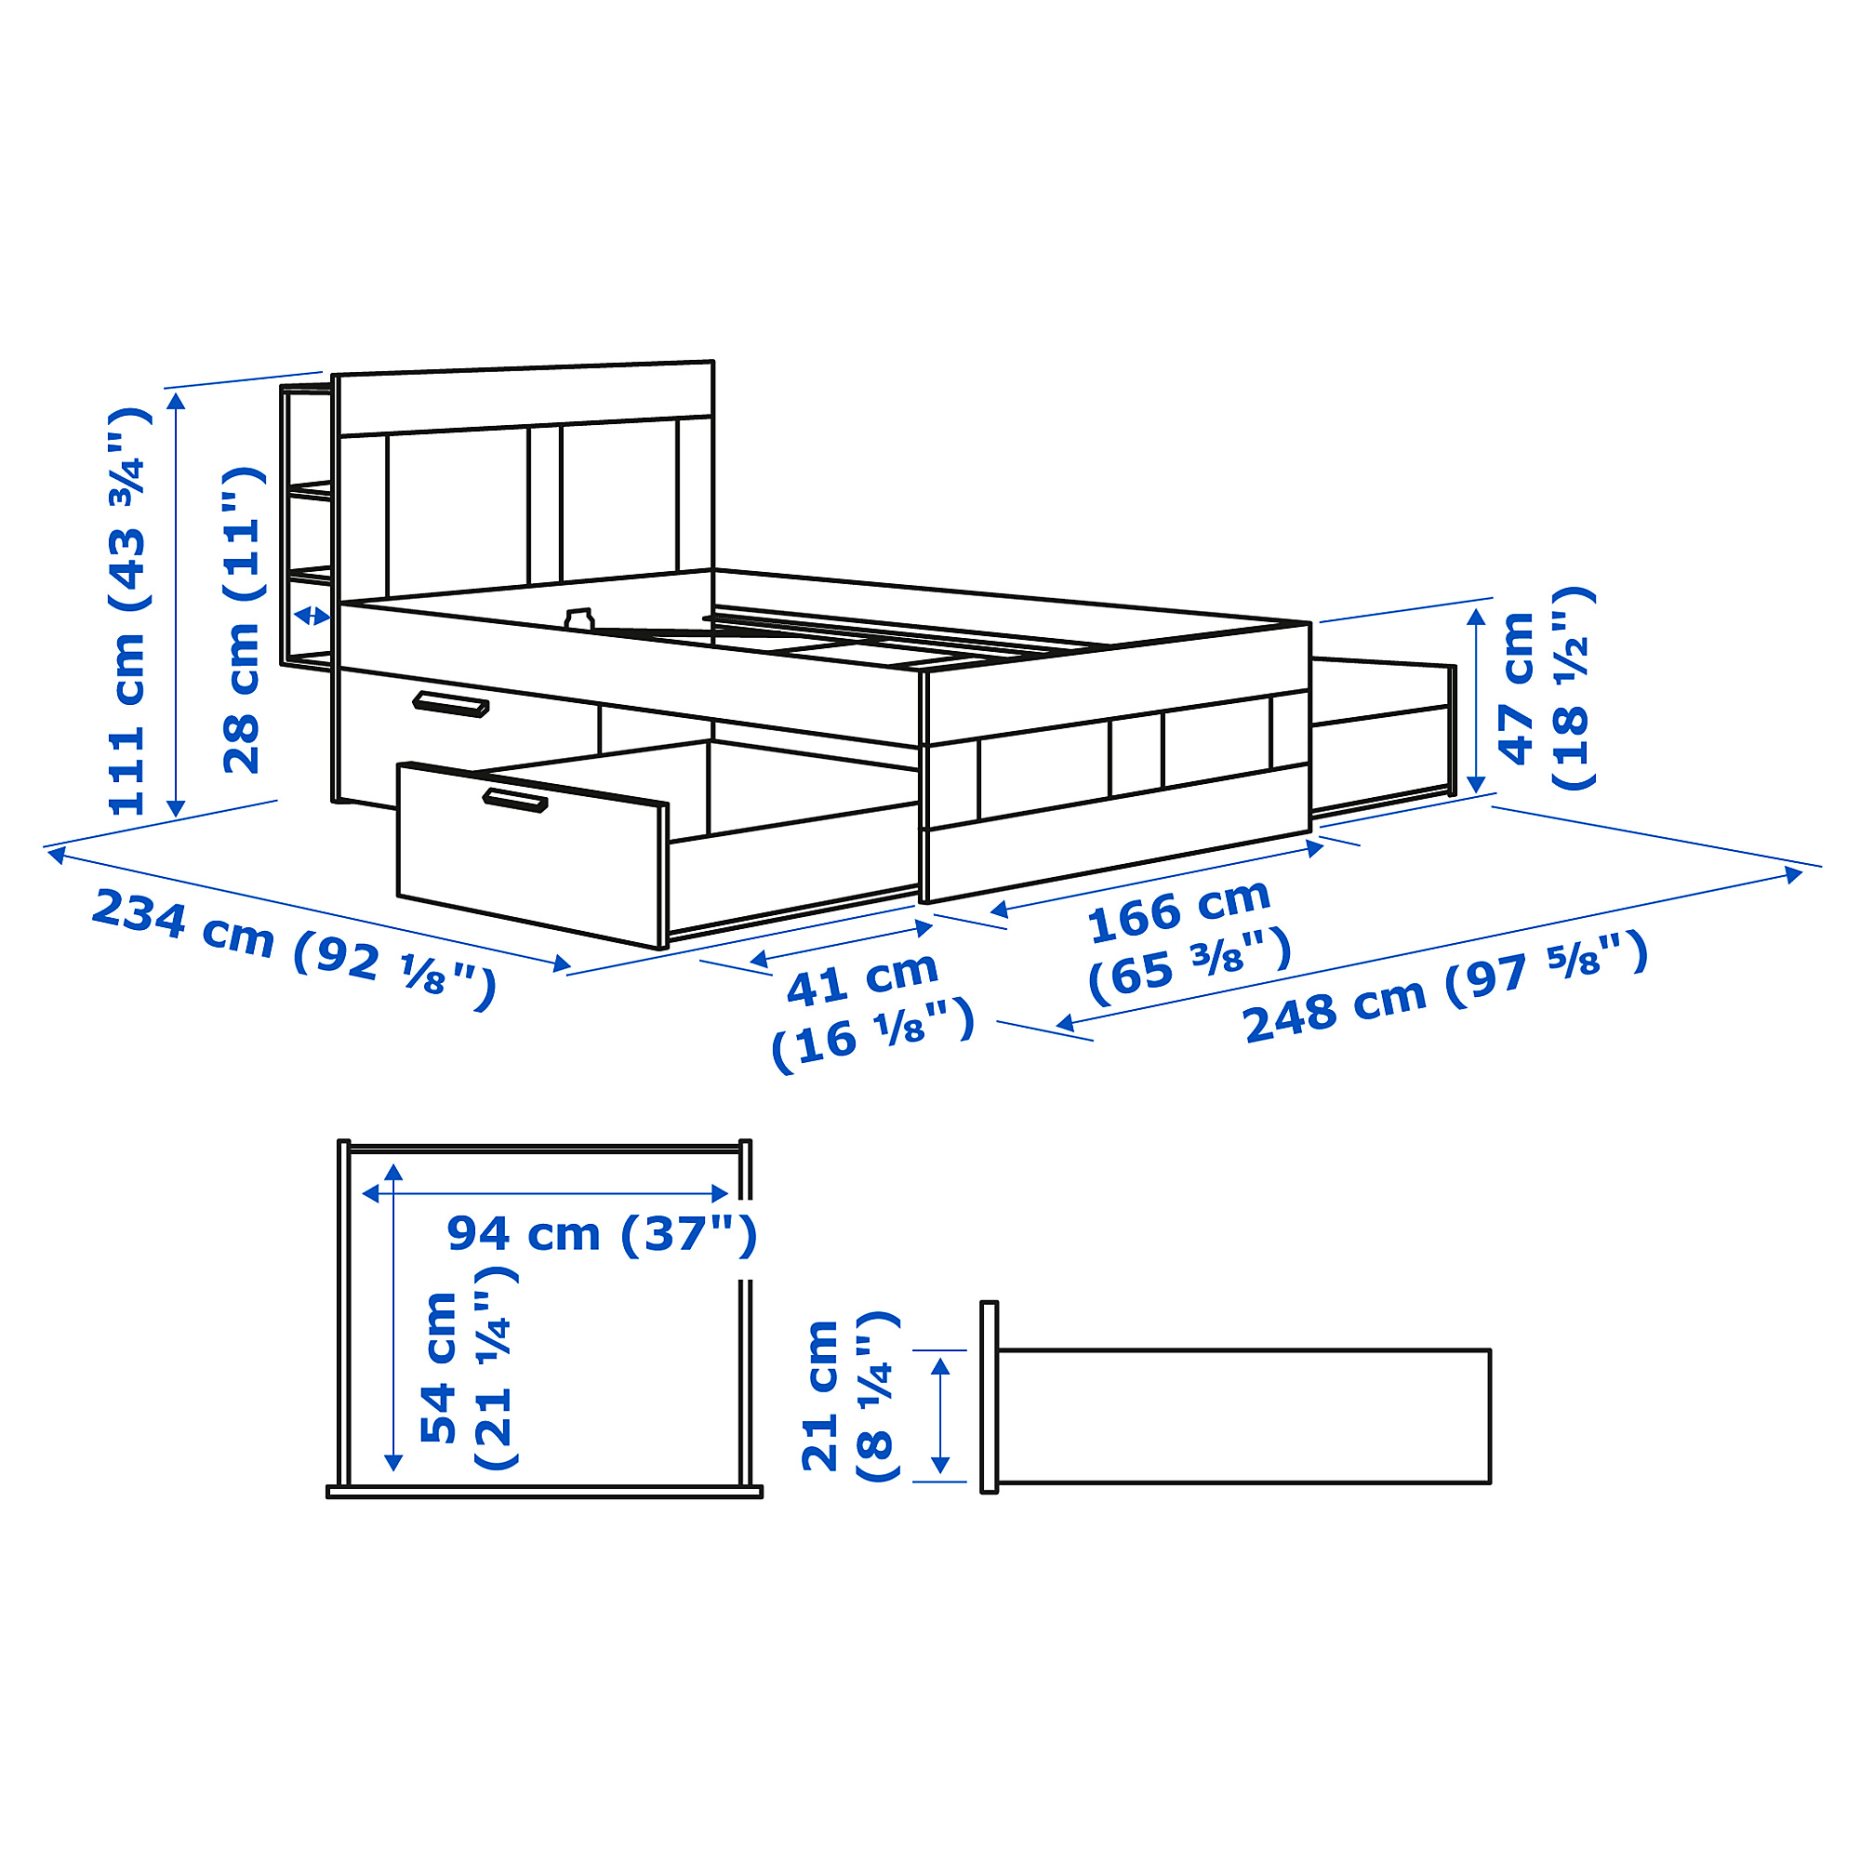 BRIMNES, bedroom furniture/set of 3, 160x200 cm, 694.833.93